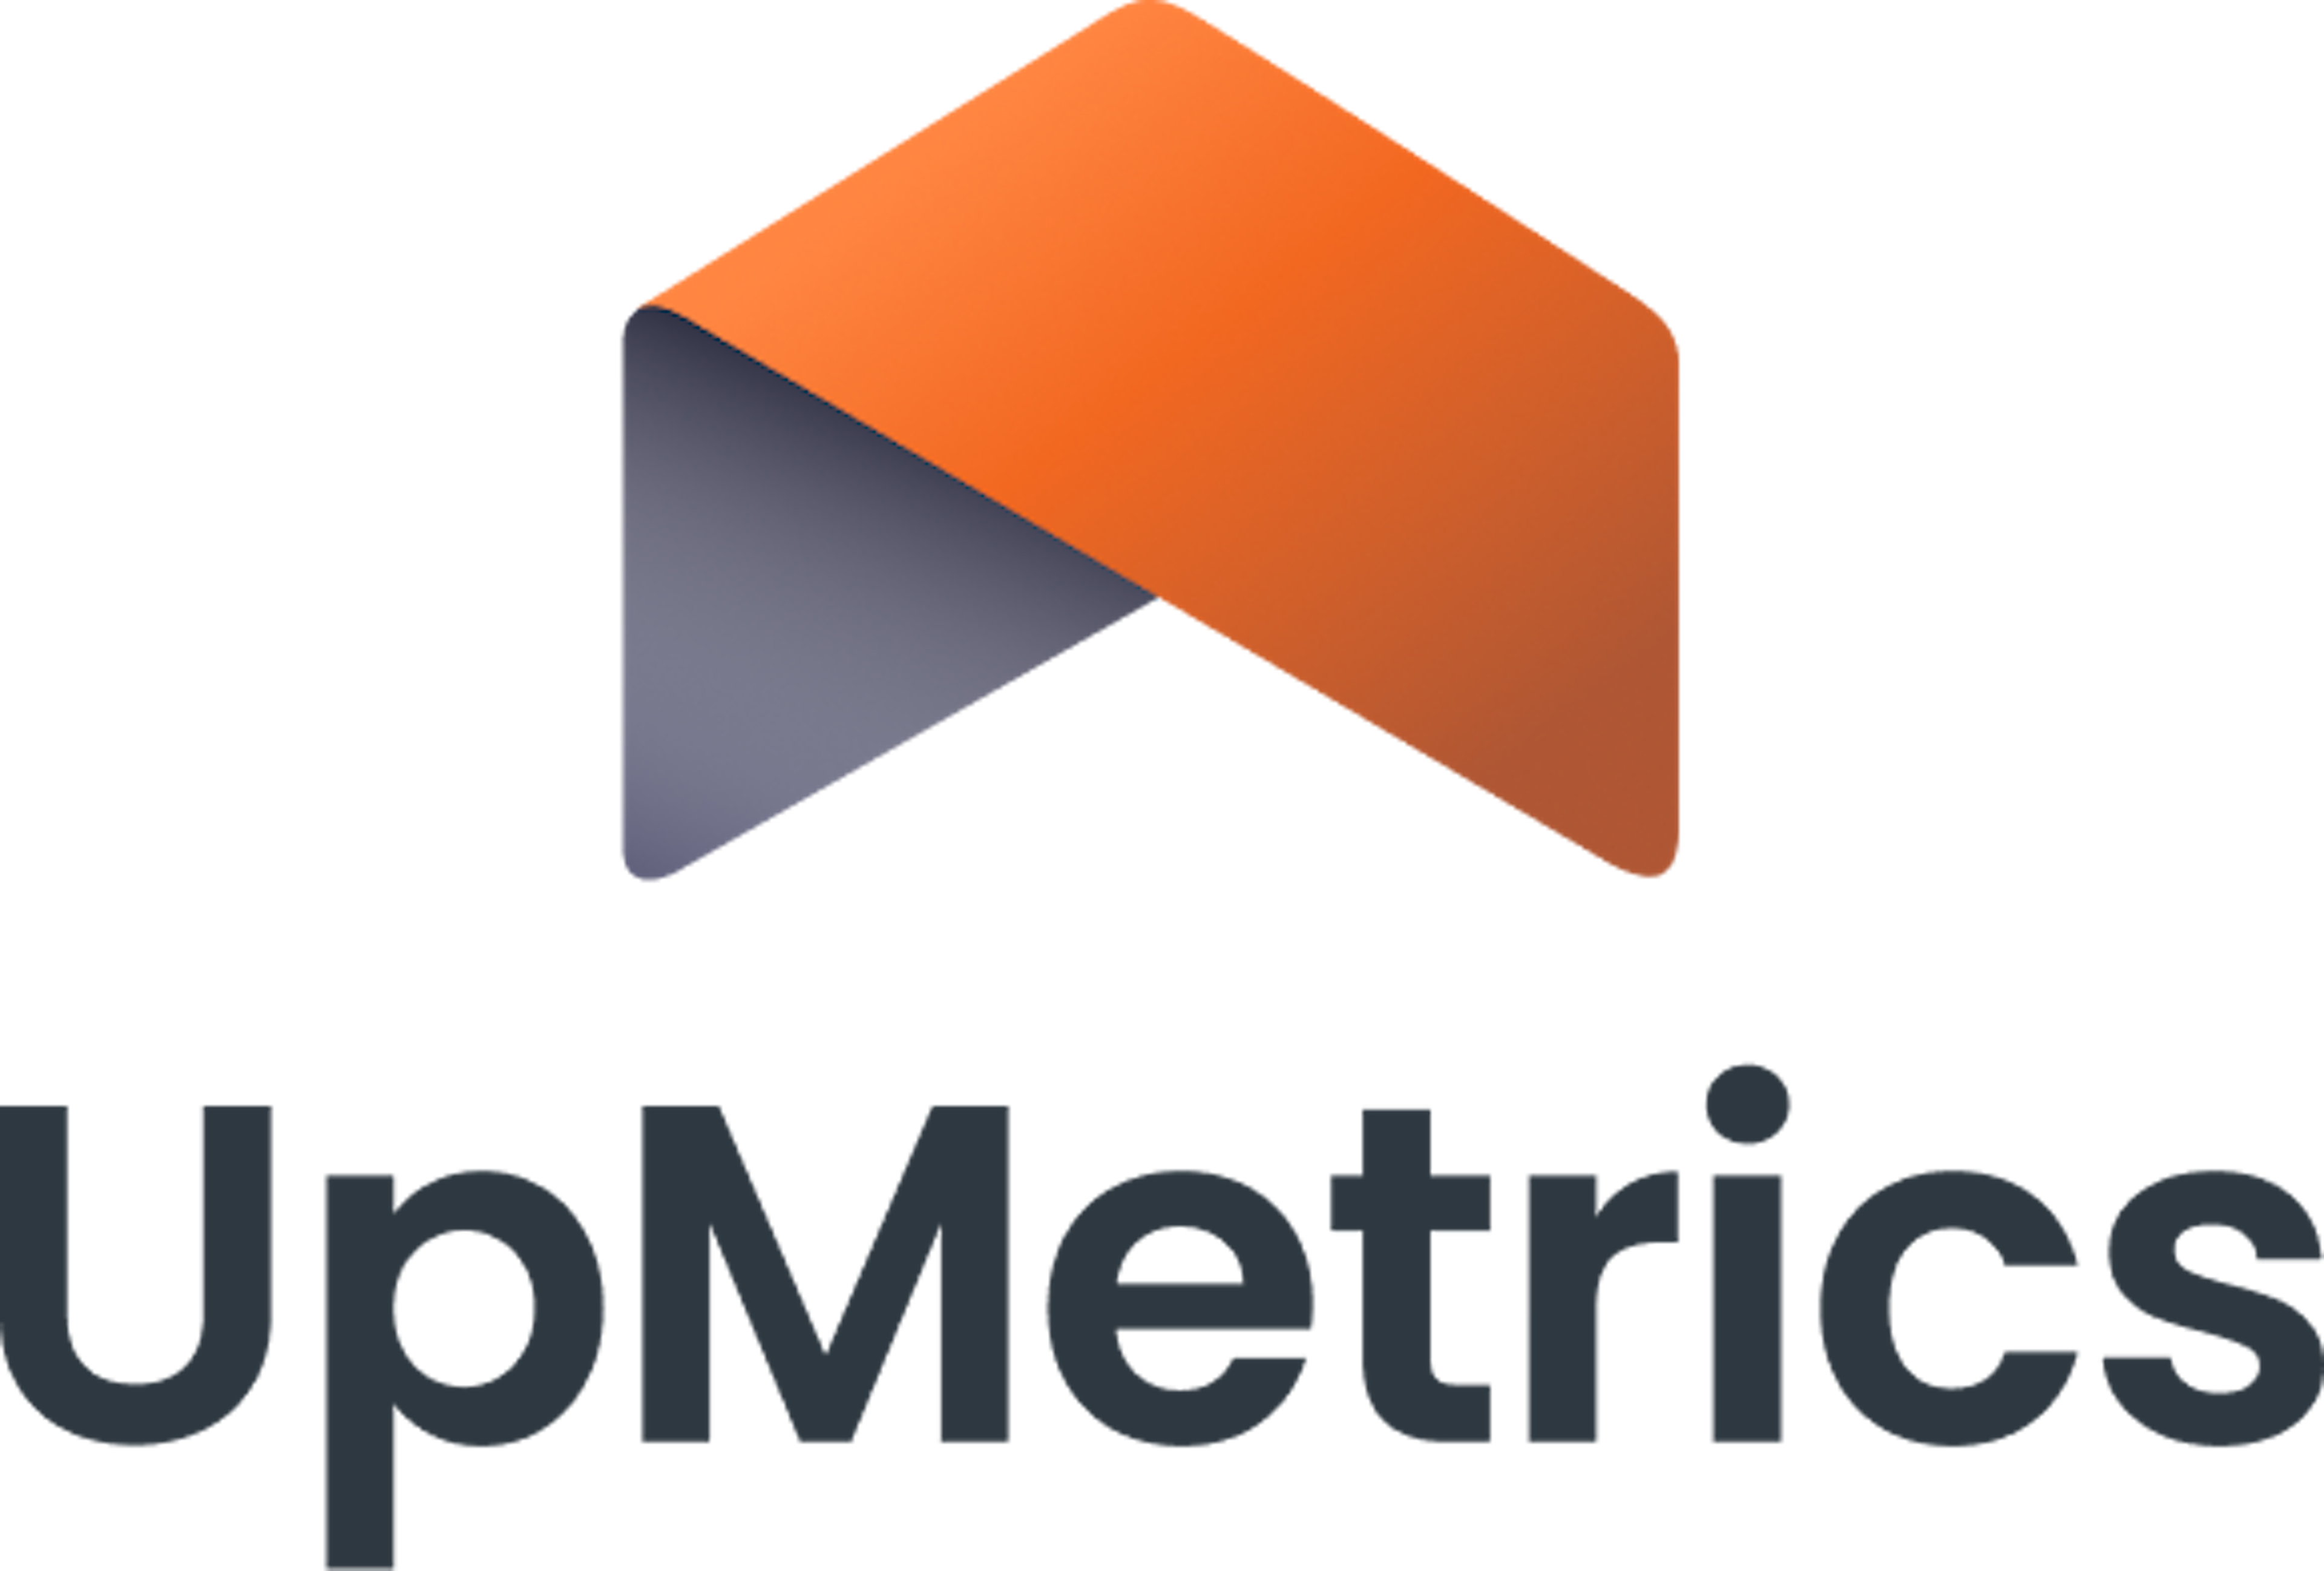 UpMetrics Logo